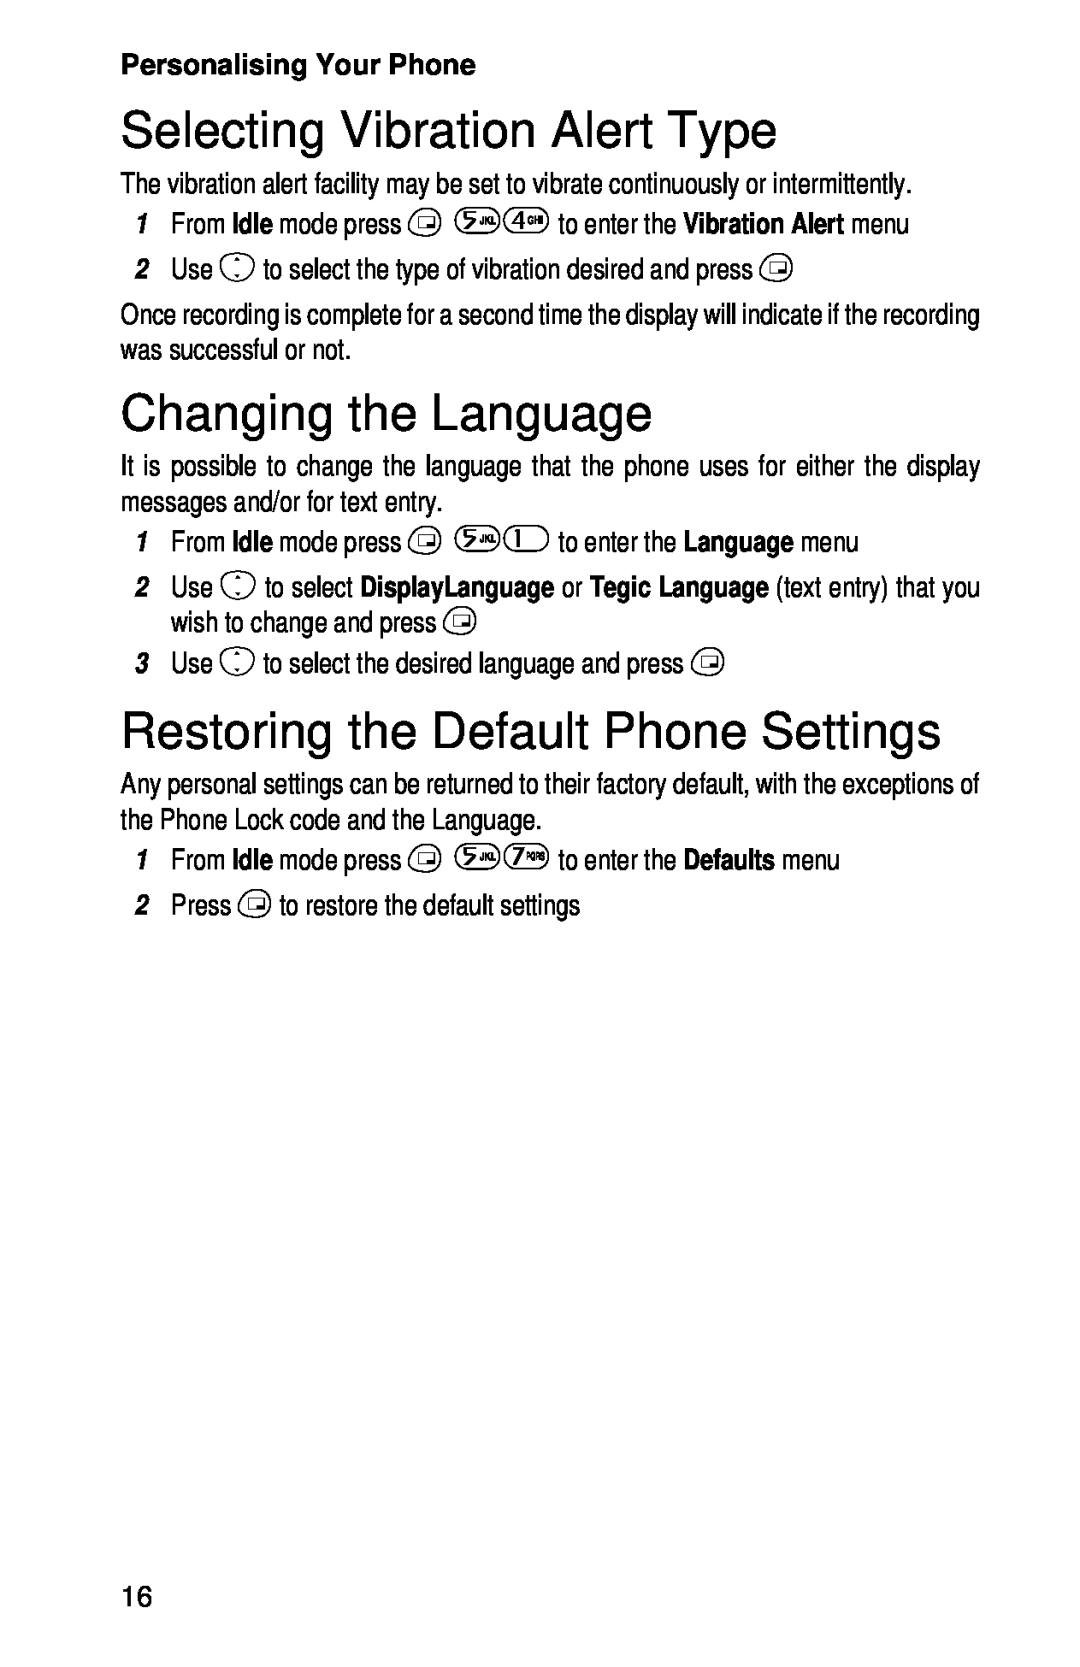 Panasonic EB-GD52 Selecting Vibration Alert Type, Changing the Language, Restoring the Default Phone Settings 